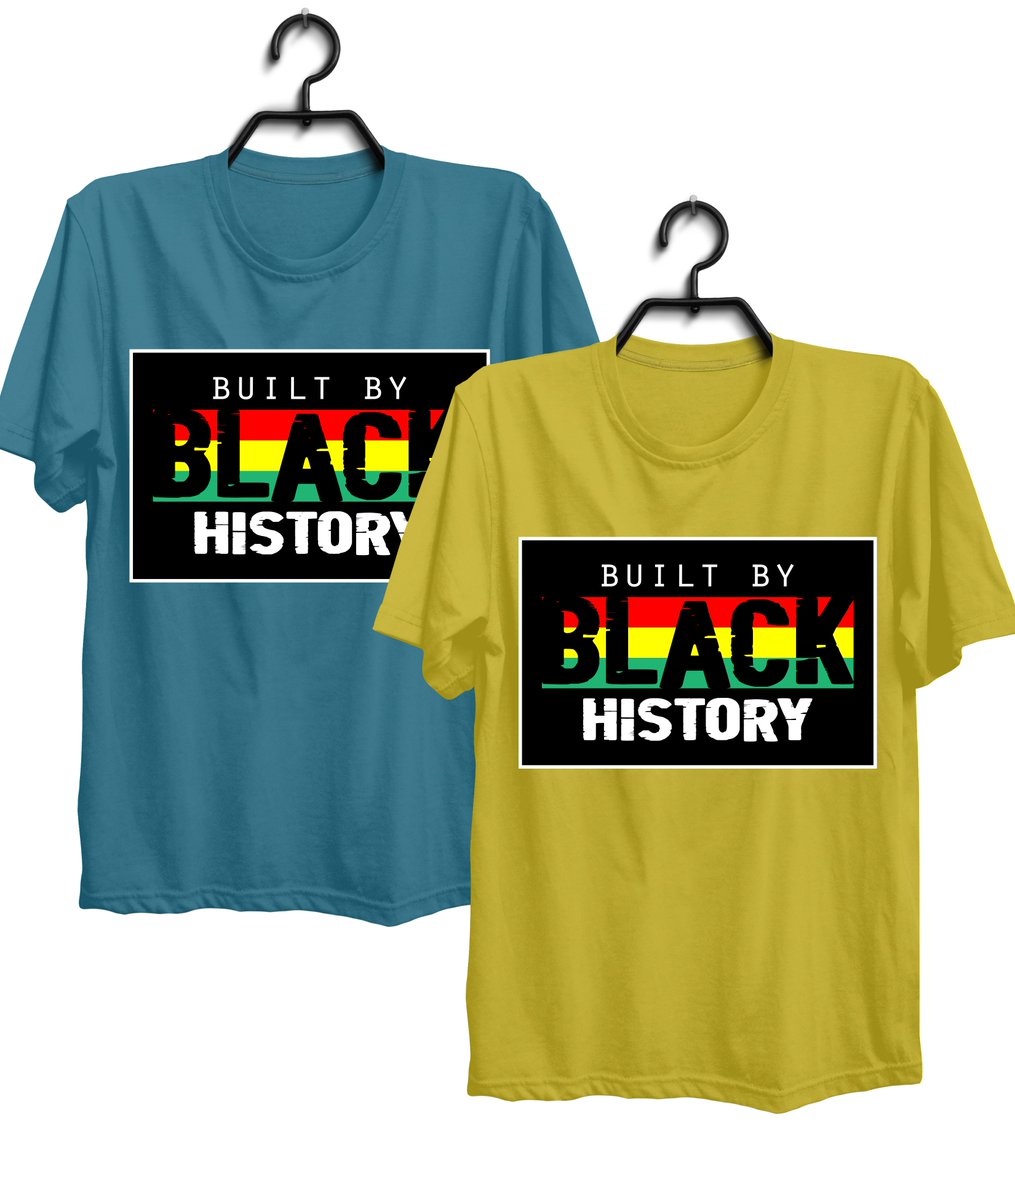 If you need Design
Order for Custom T-shirt Design
Fiverr: fiverr.com/users/merchama…
___
#blackhistorymonth #melaninrich #unapologeticallyafrican #blackhistoryfacts #blackculture #blacklovedoc #blackness #blackmothers #melaninonfleek #blacklegacy #top
#GRAMMYs, #JackHarlow, #Lizzo